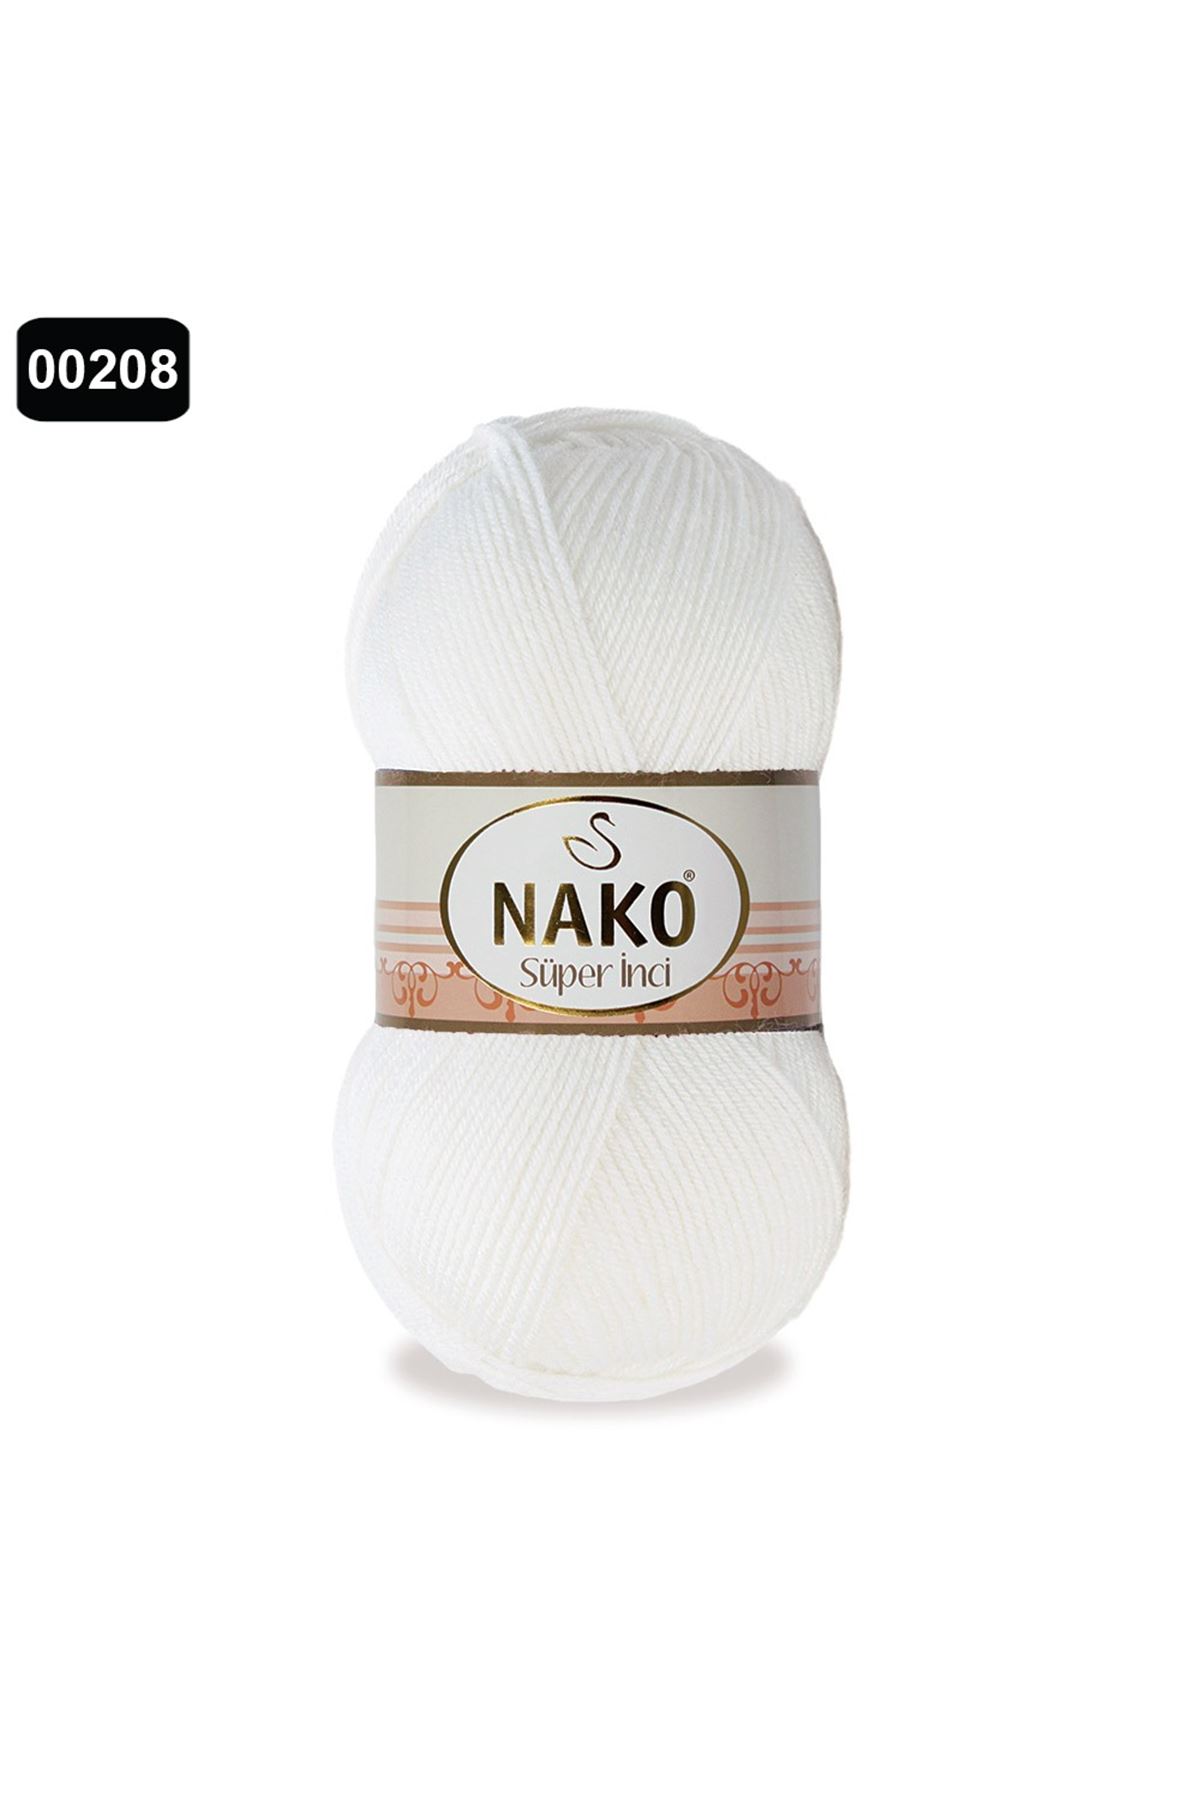 Nako Süper İnci Renk No: 208